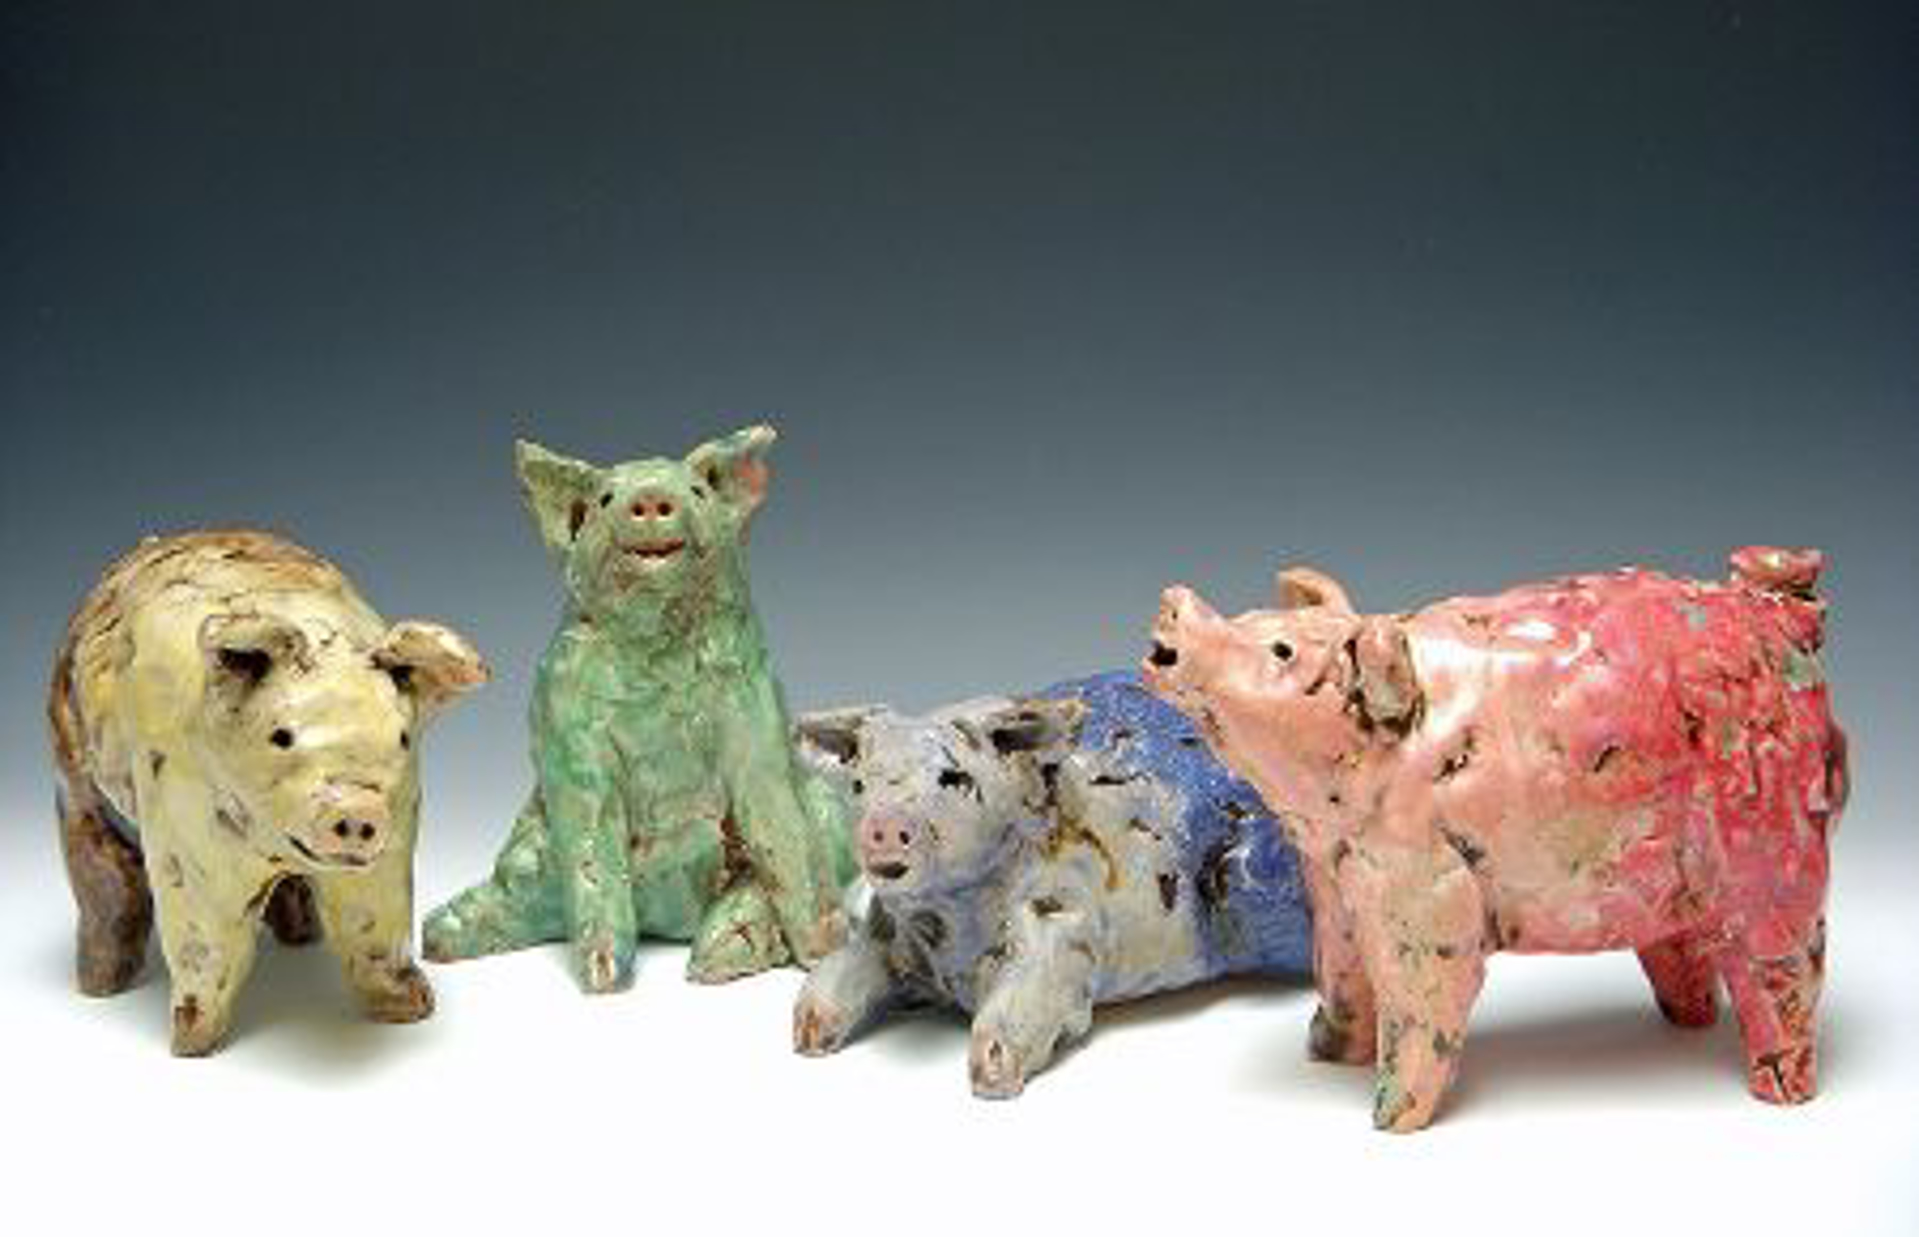 Small Piggles by Kari Rives